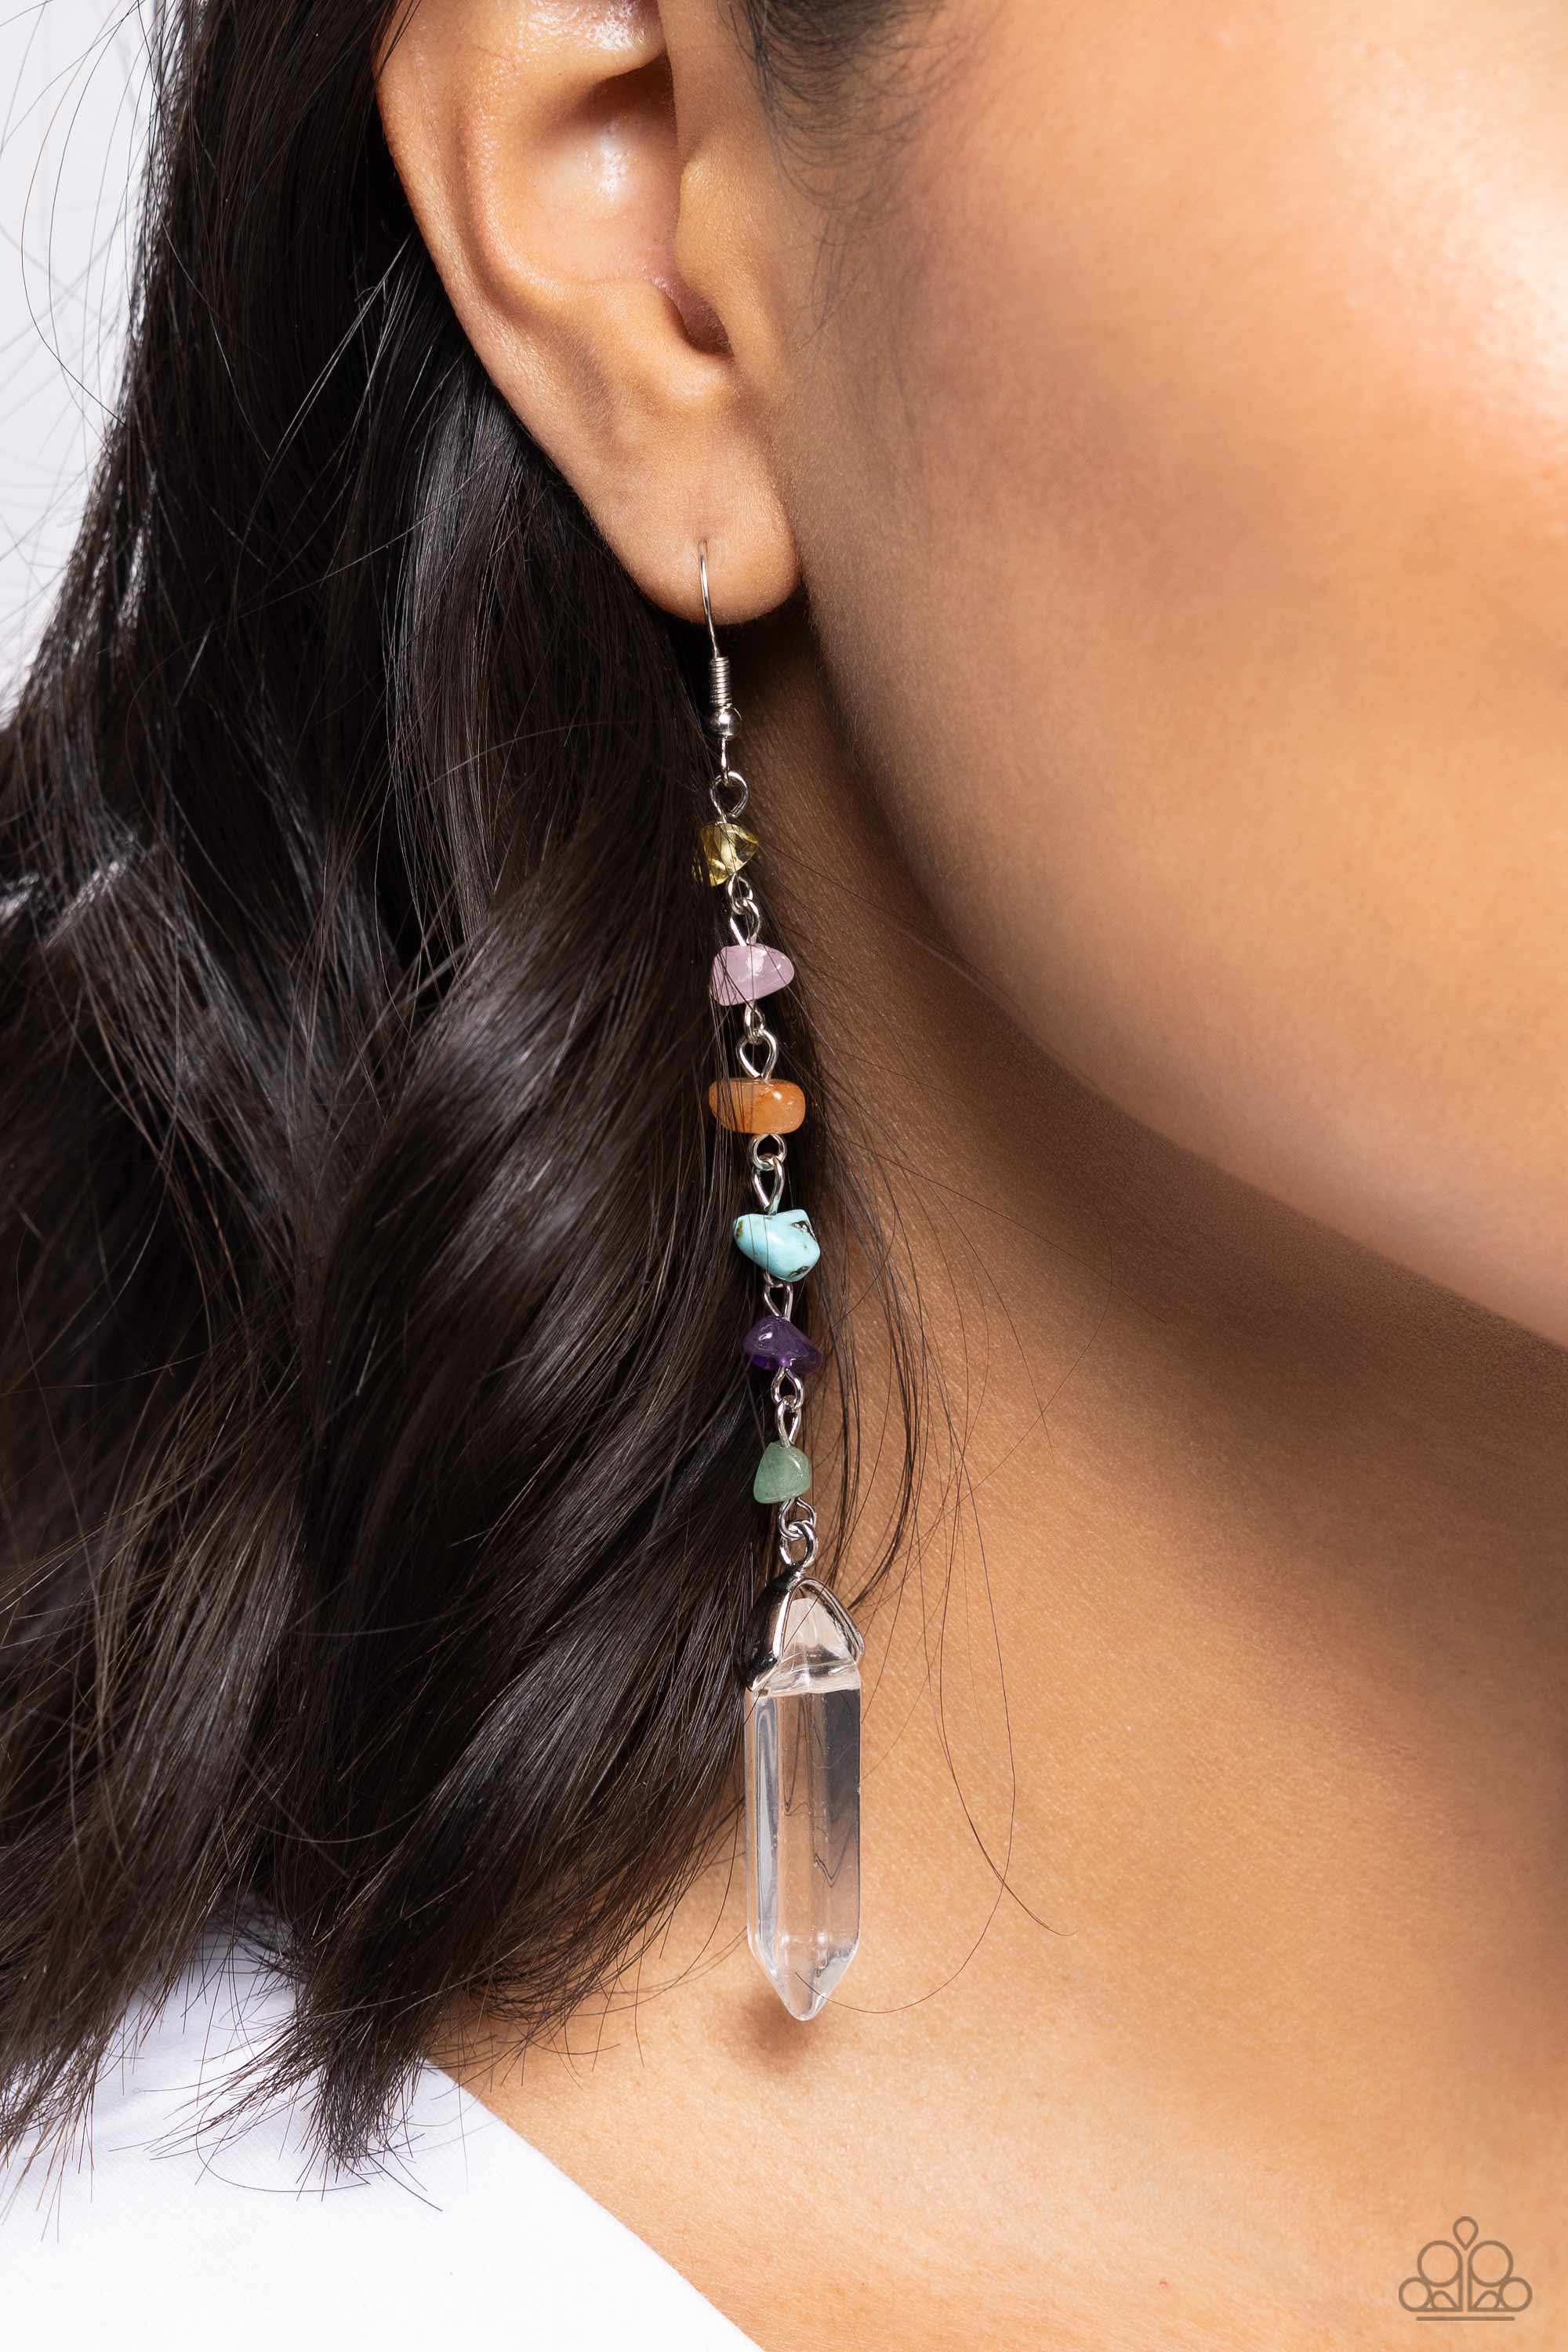 Quartz Qualification Multi Earrings - Paparazzi Accessories- lightbox - CarasShop.com - $5 Jewelry by Cara Jewels